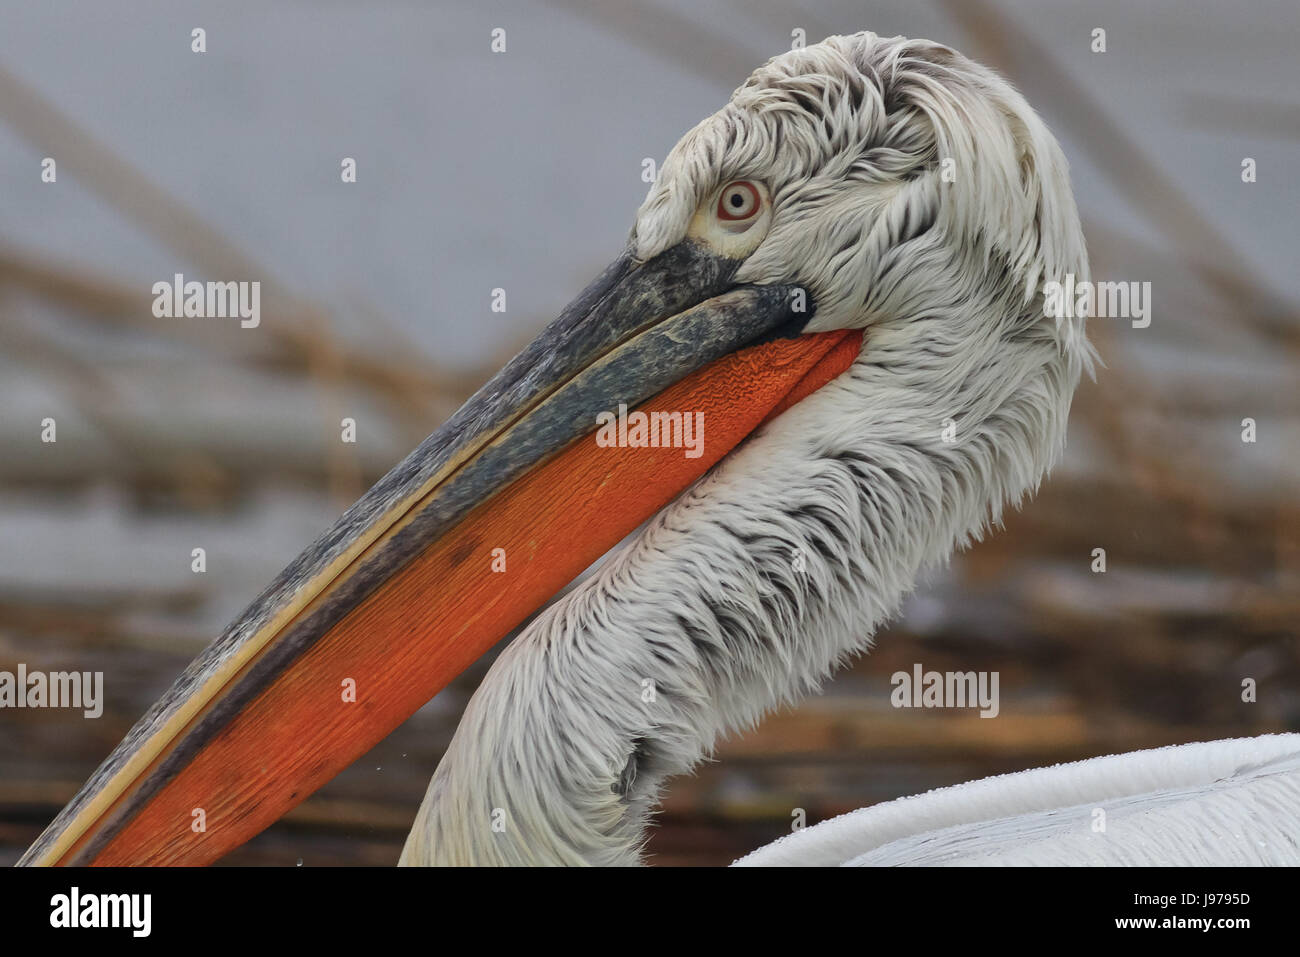 bird, portrait, wildlife, pelican, dalmatian, danube delta, single, animal, Stock Photo